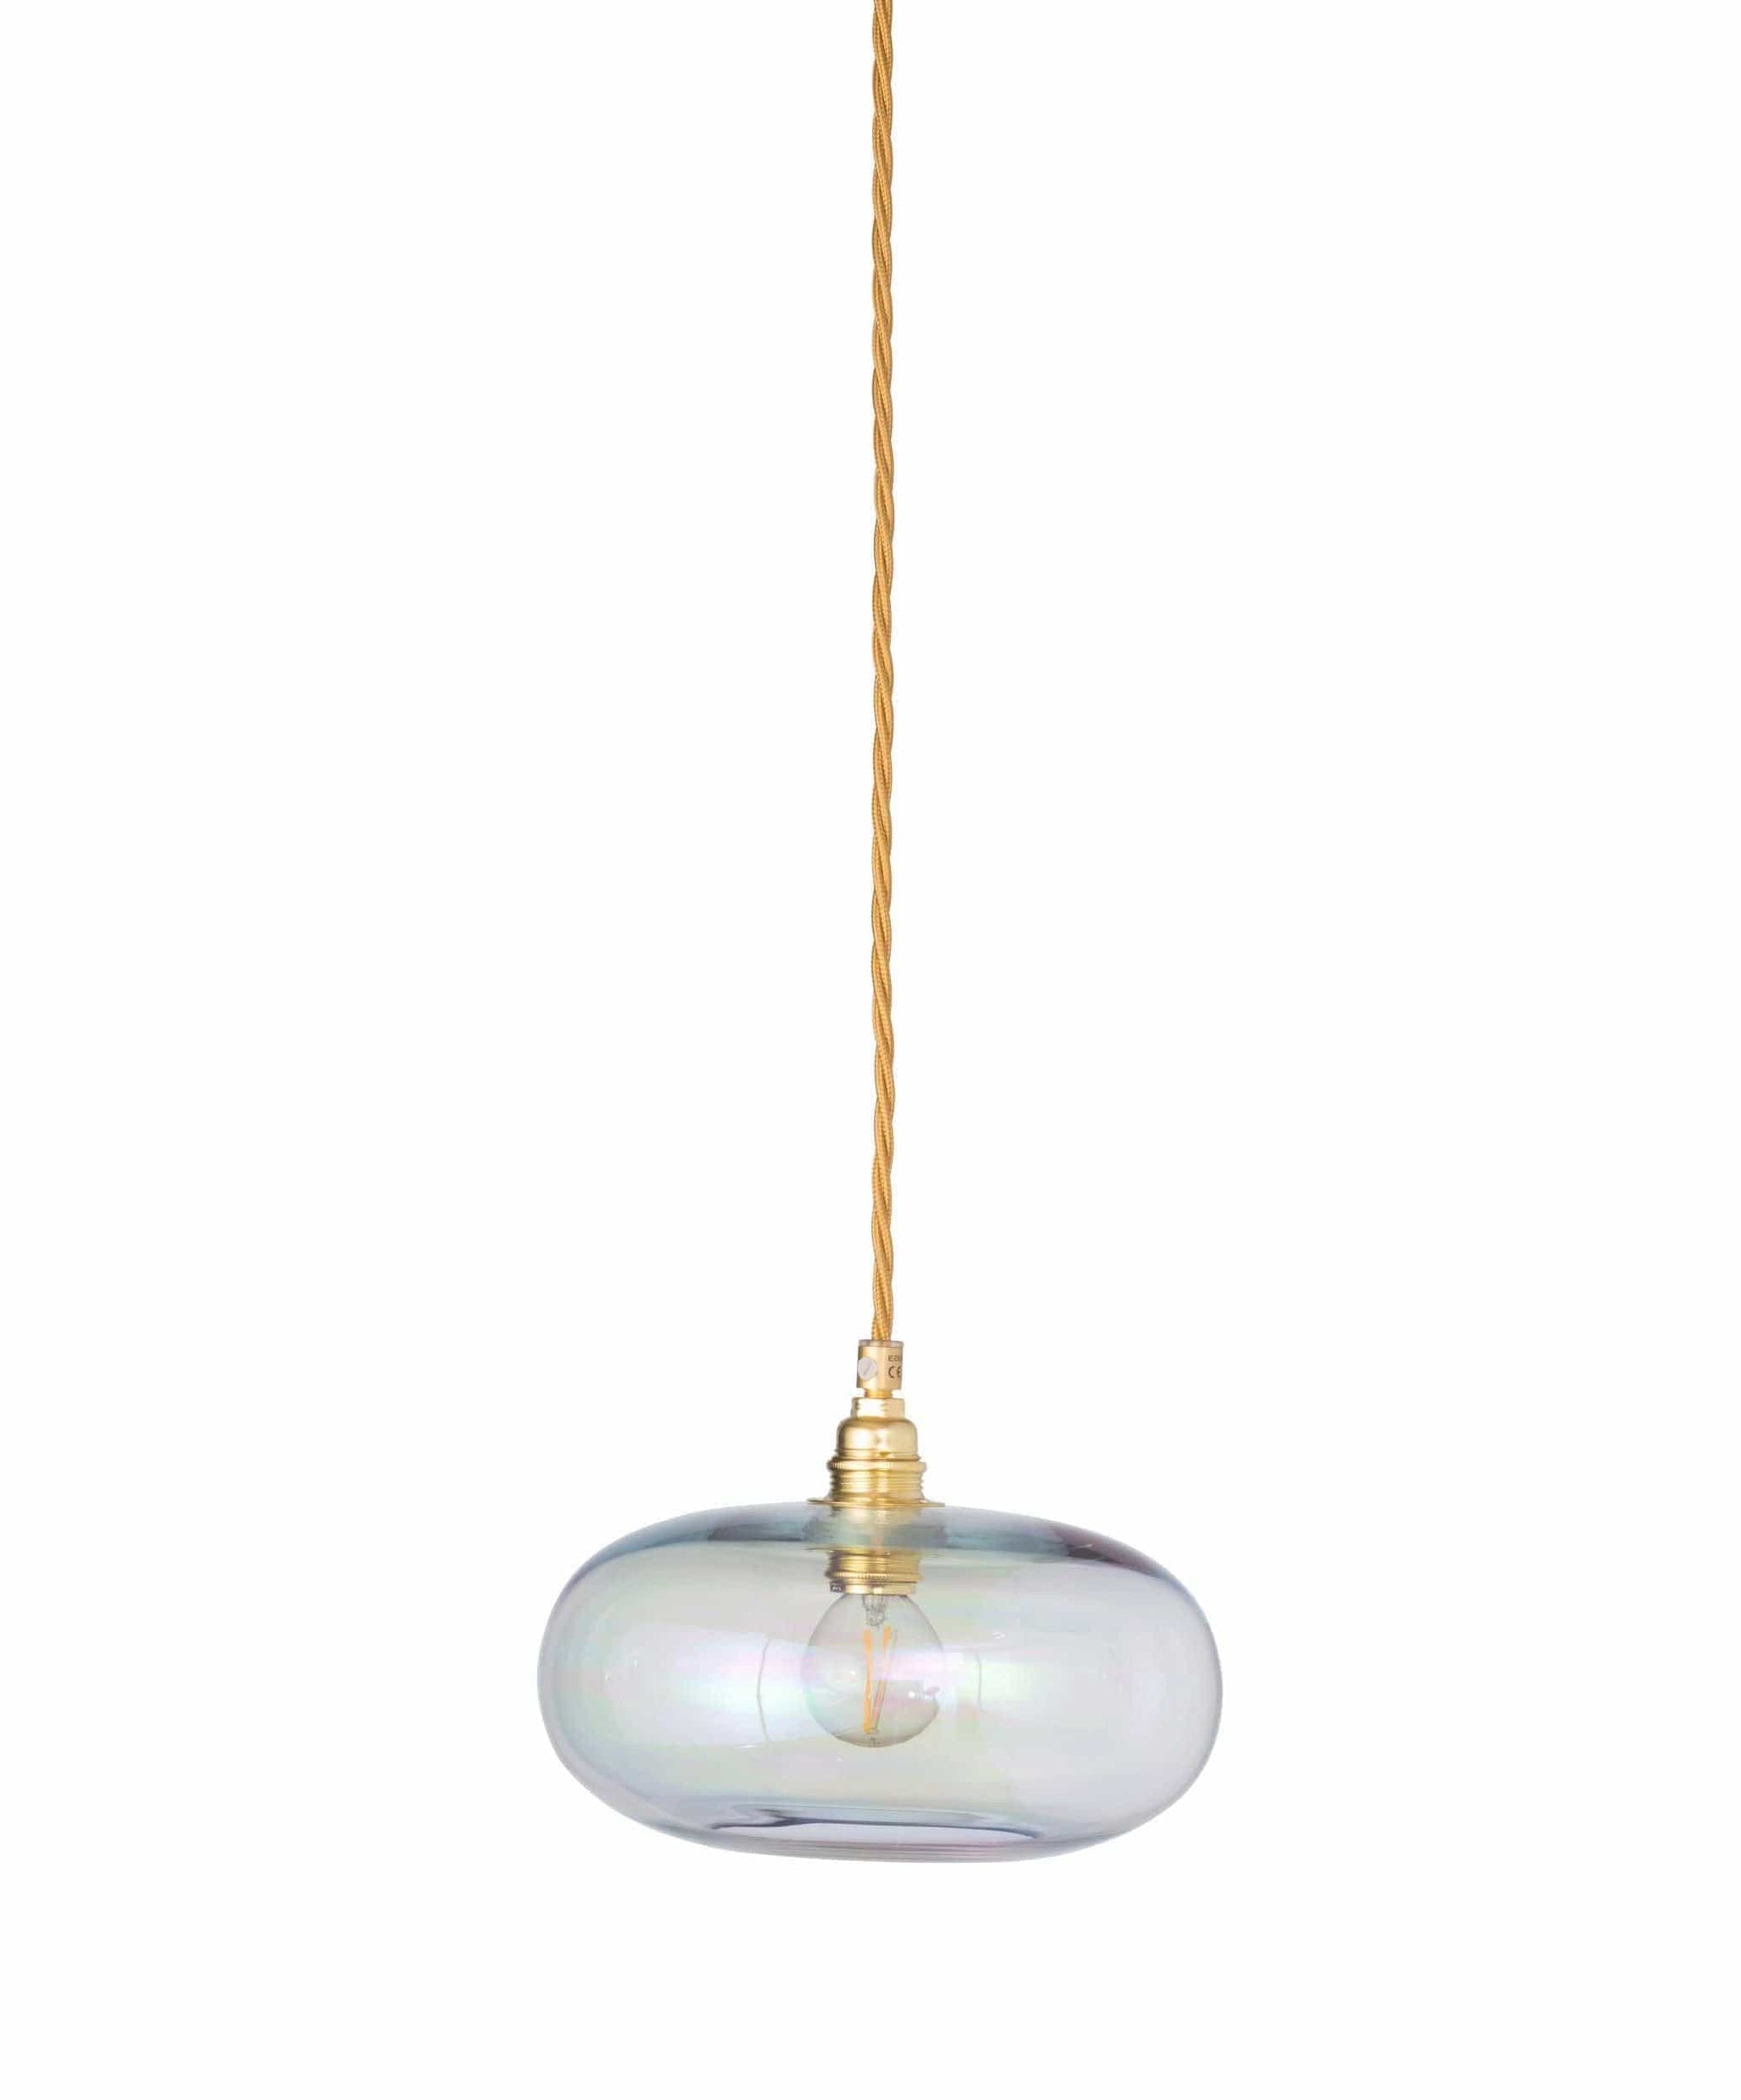 Ebb&Flow Pendant lights Chameleon with gold fittings Horizon Mouth-Blown Glass Pendant Light, small